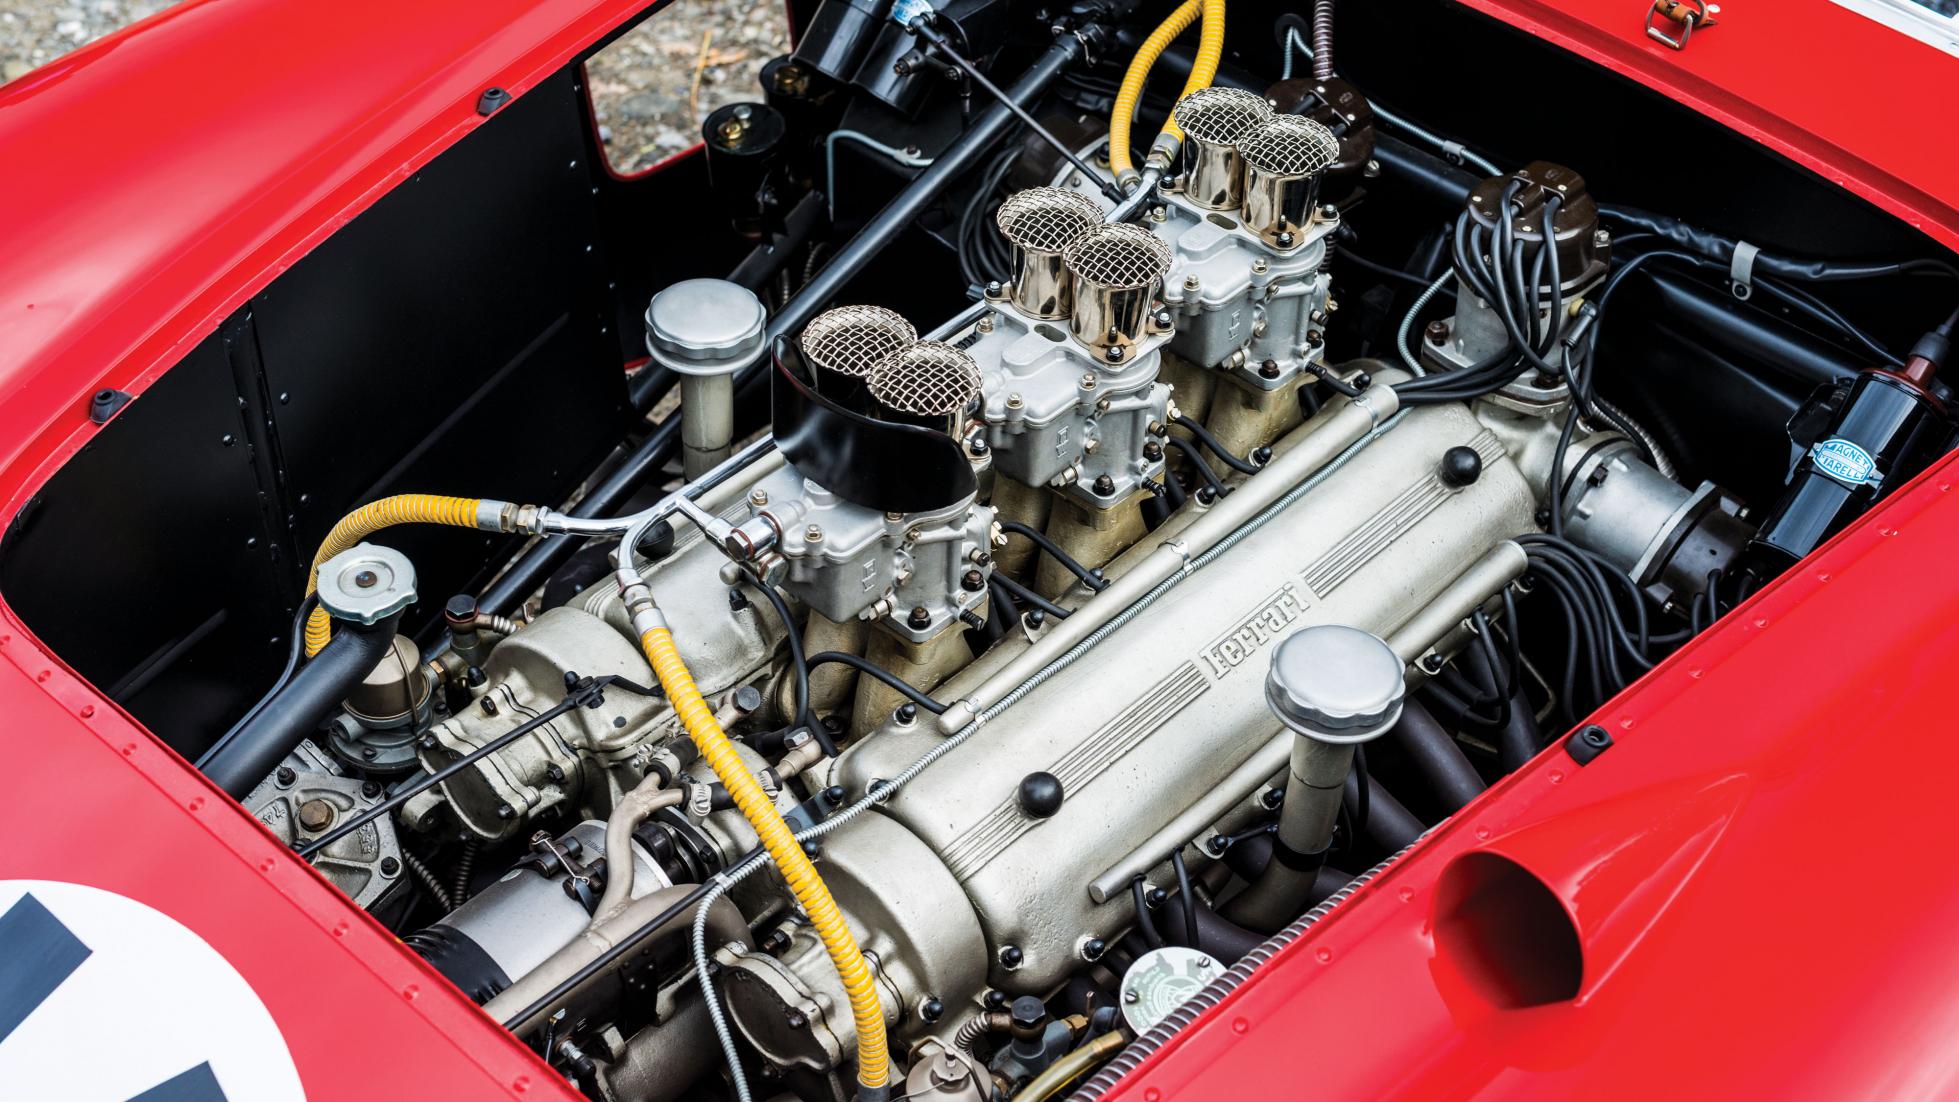 Редчайший спорткар Ferrari ушел с молотка по цене семи Bugatti Chiron